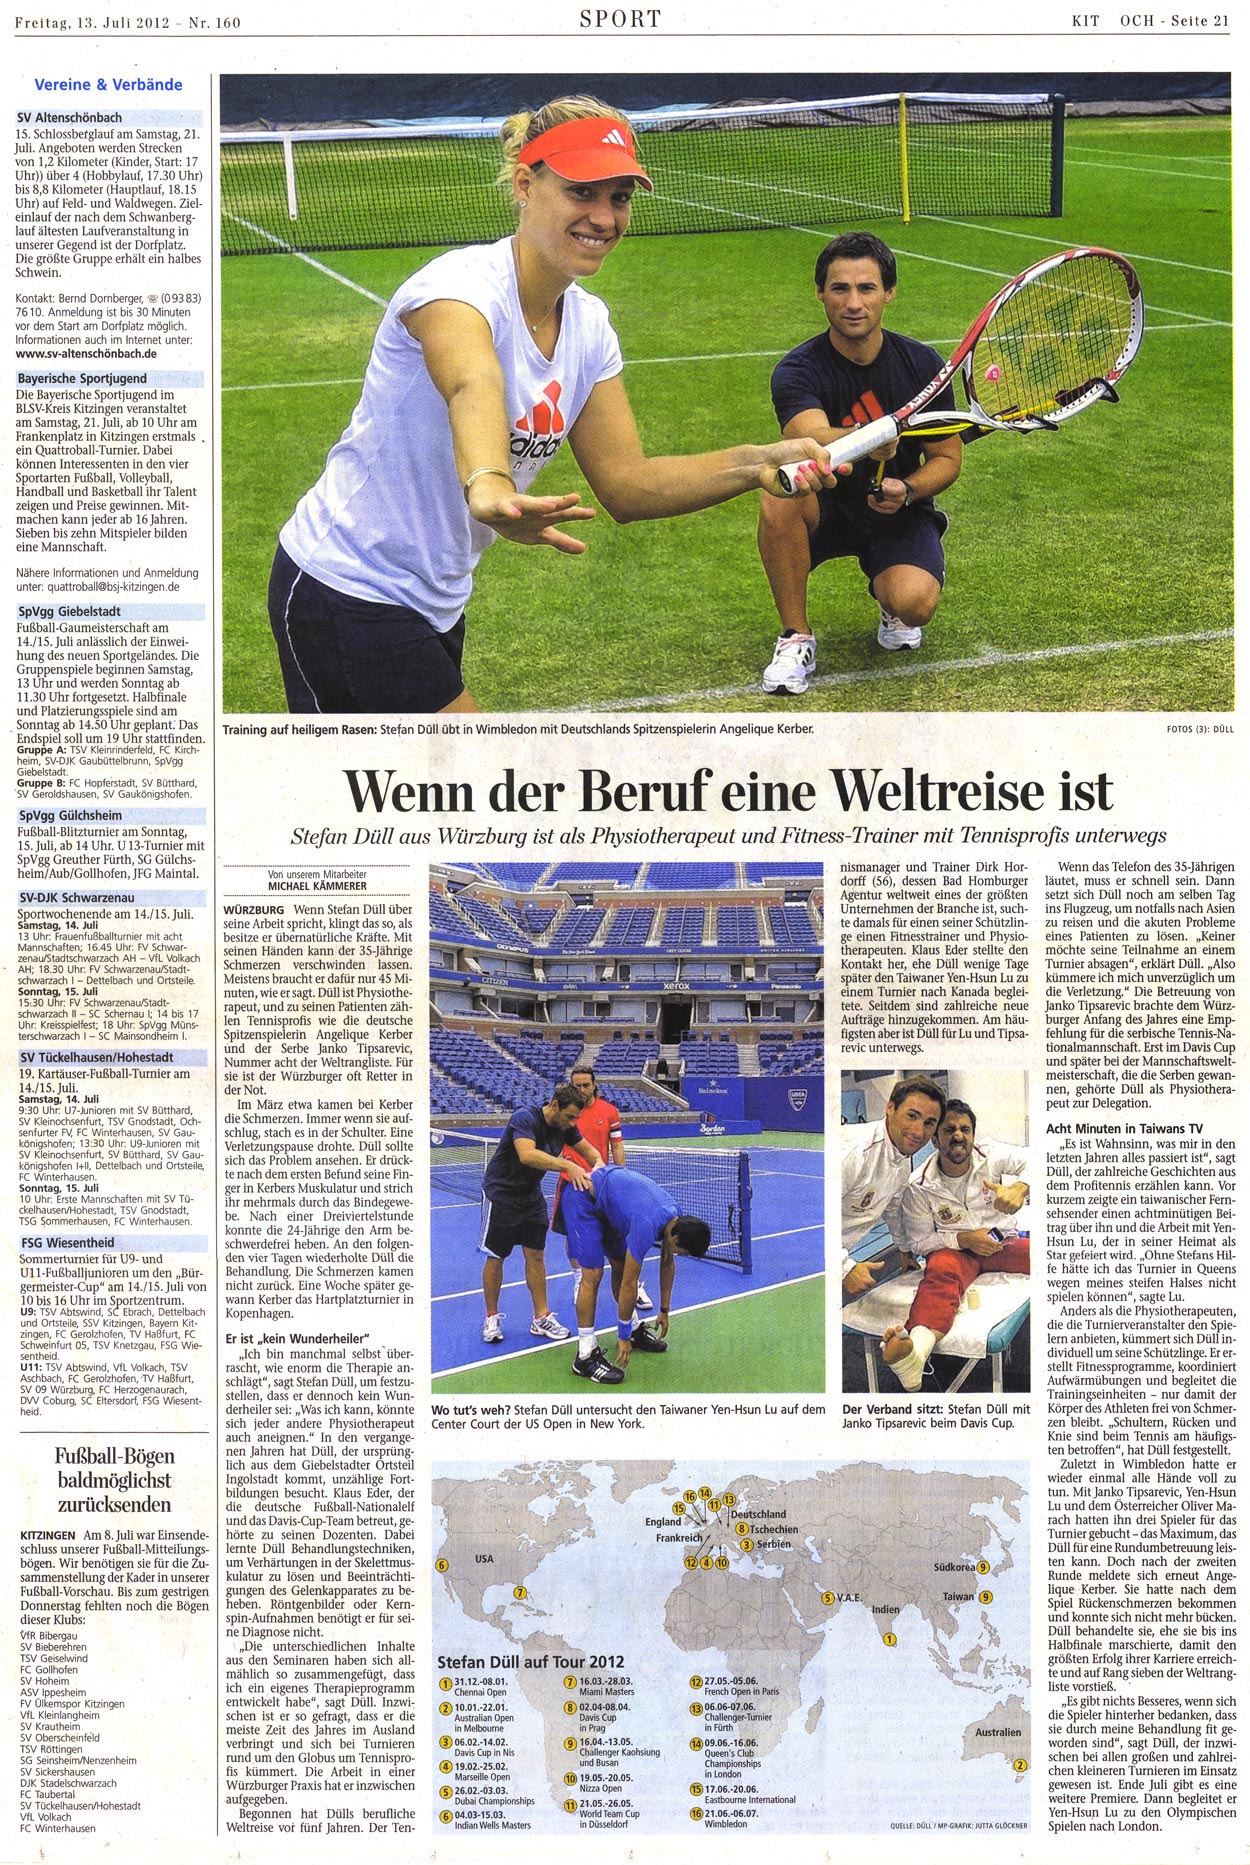 Mainpost Artikel, Juli 2012, www.mainpost.de